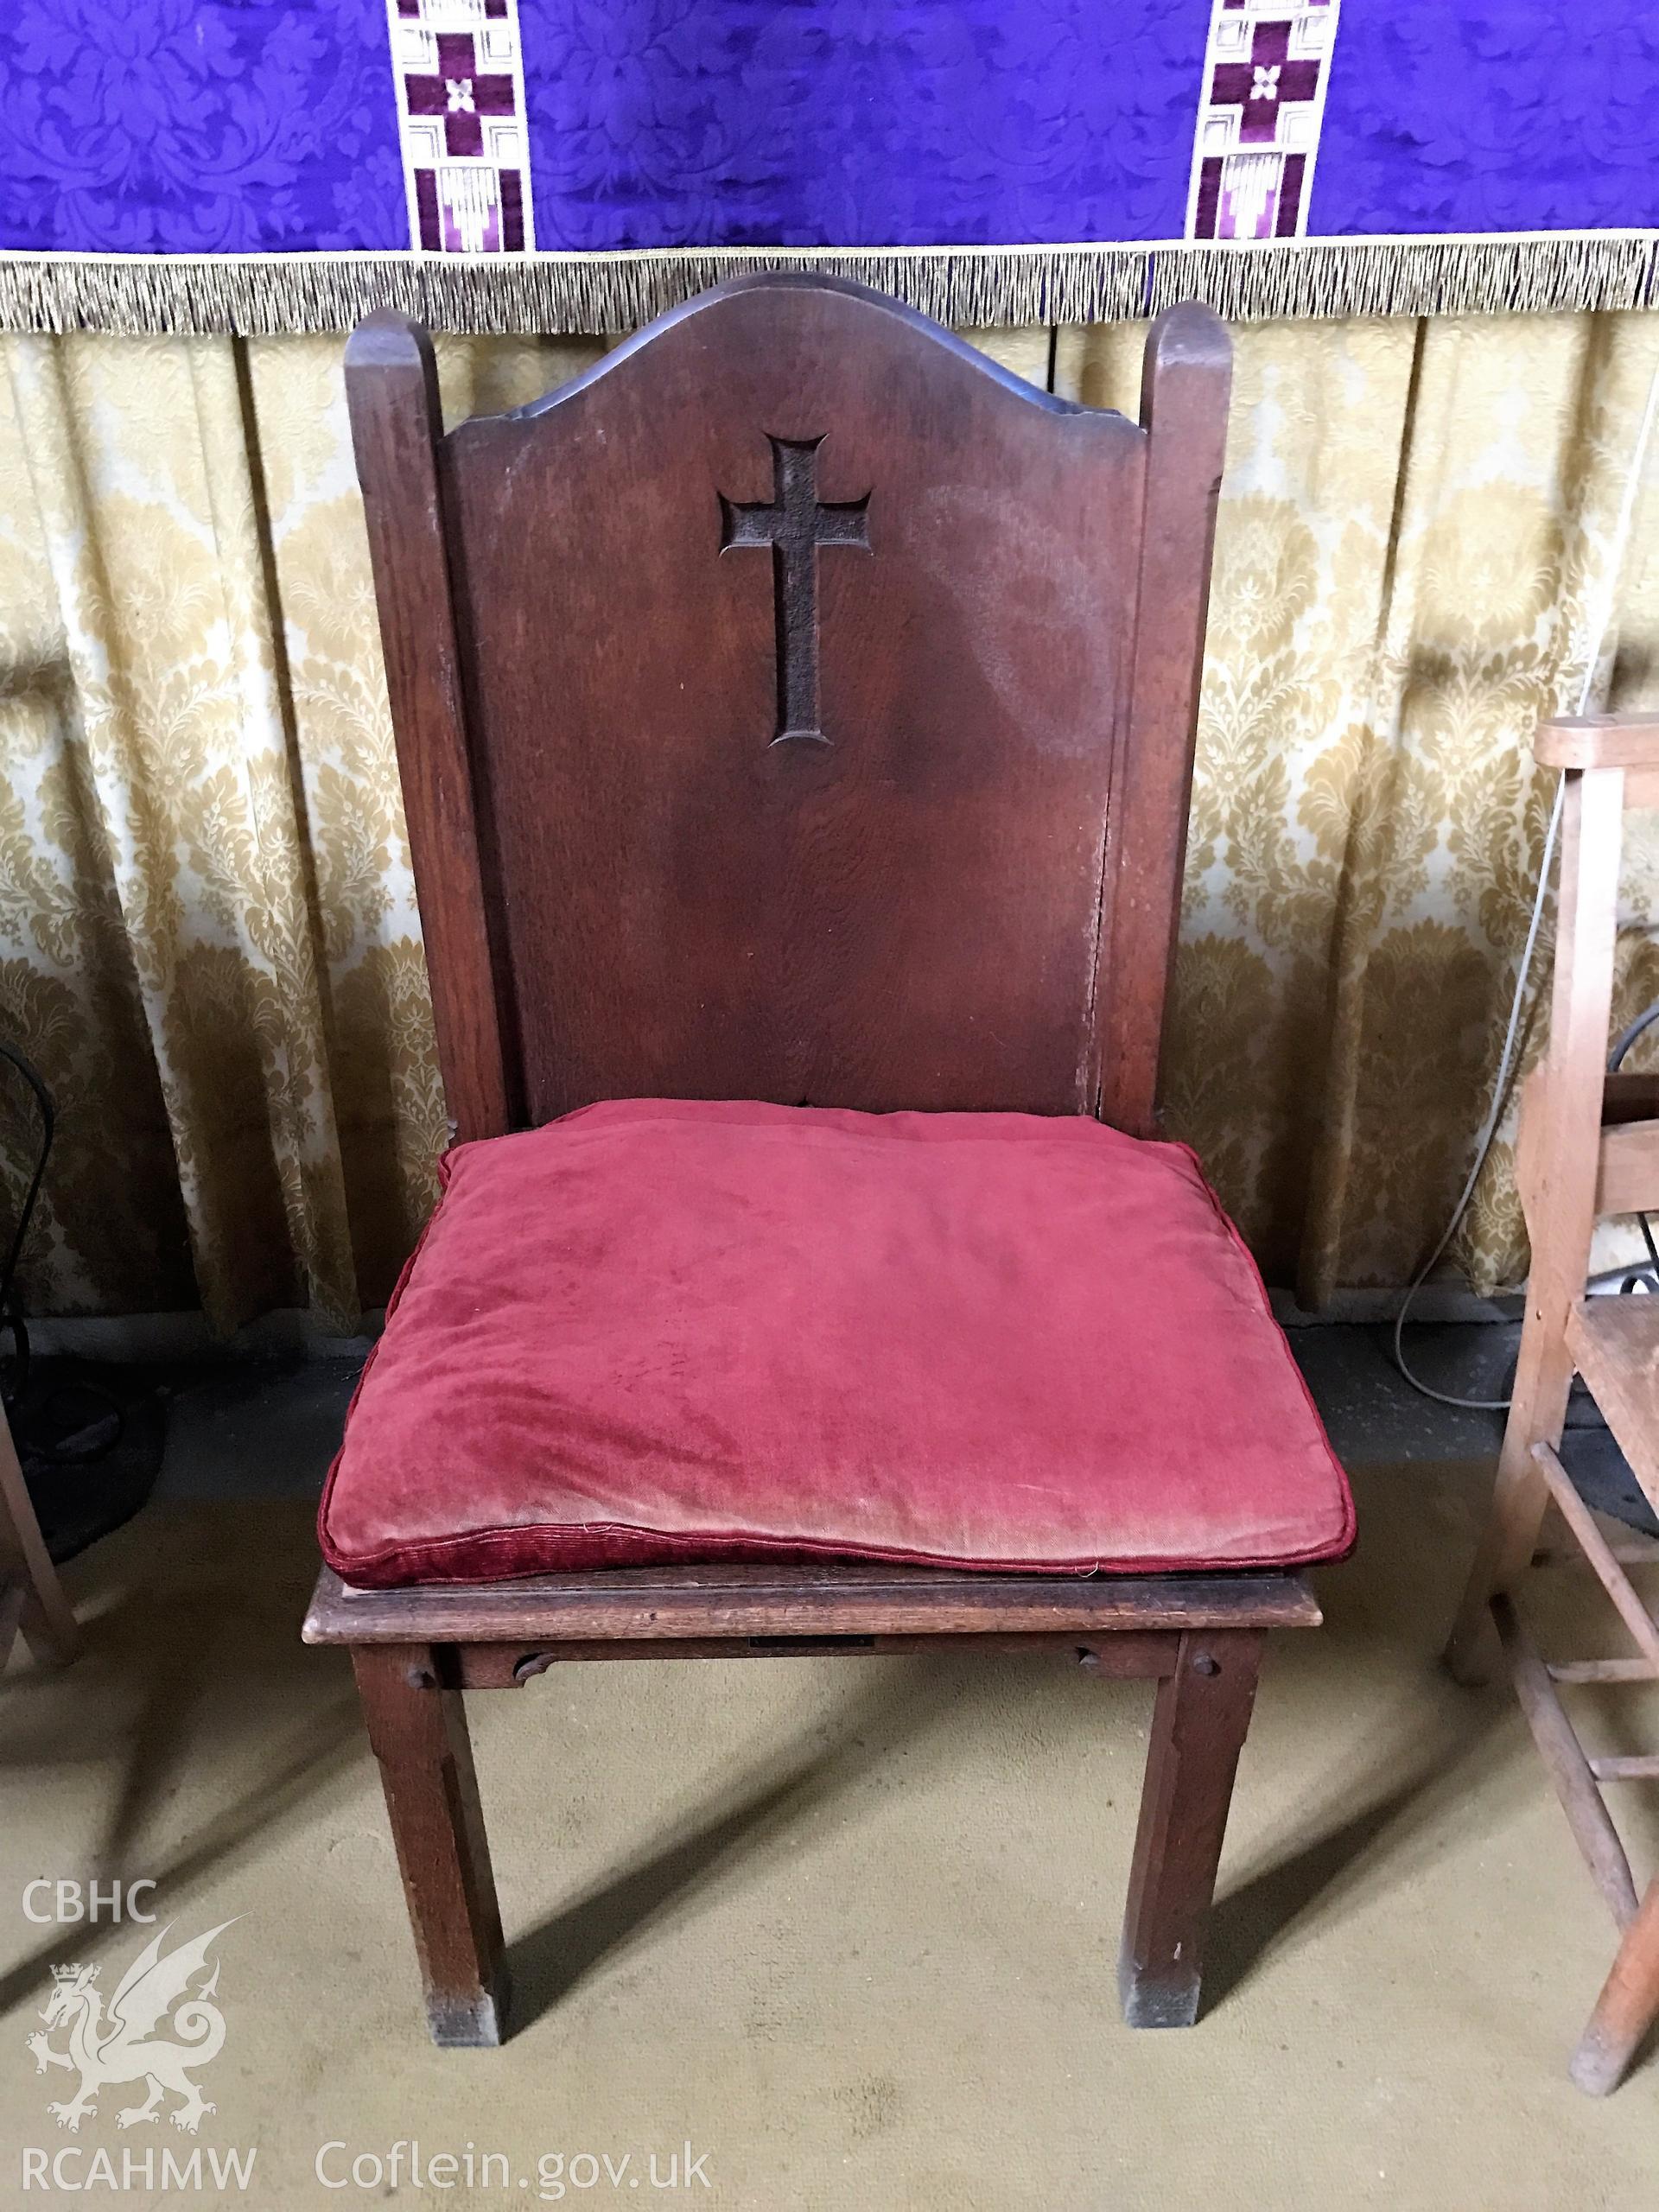 Colour photo showing the Presidential Chair at St Paul's Church, Grangetown, taken by Revd David T. Morris, 2018.